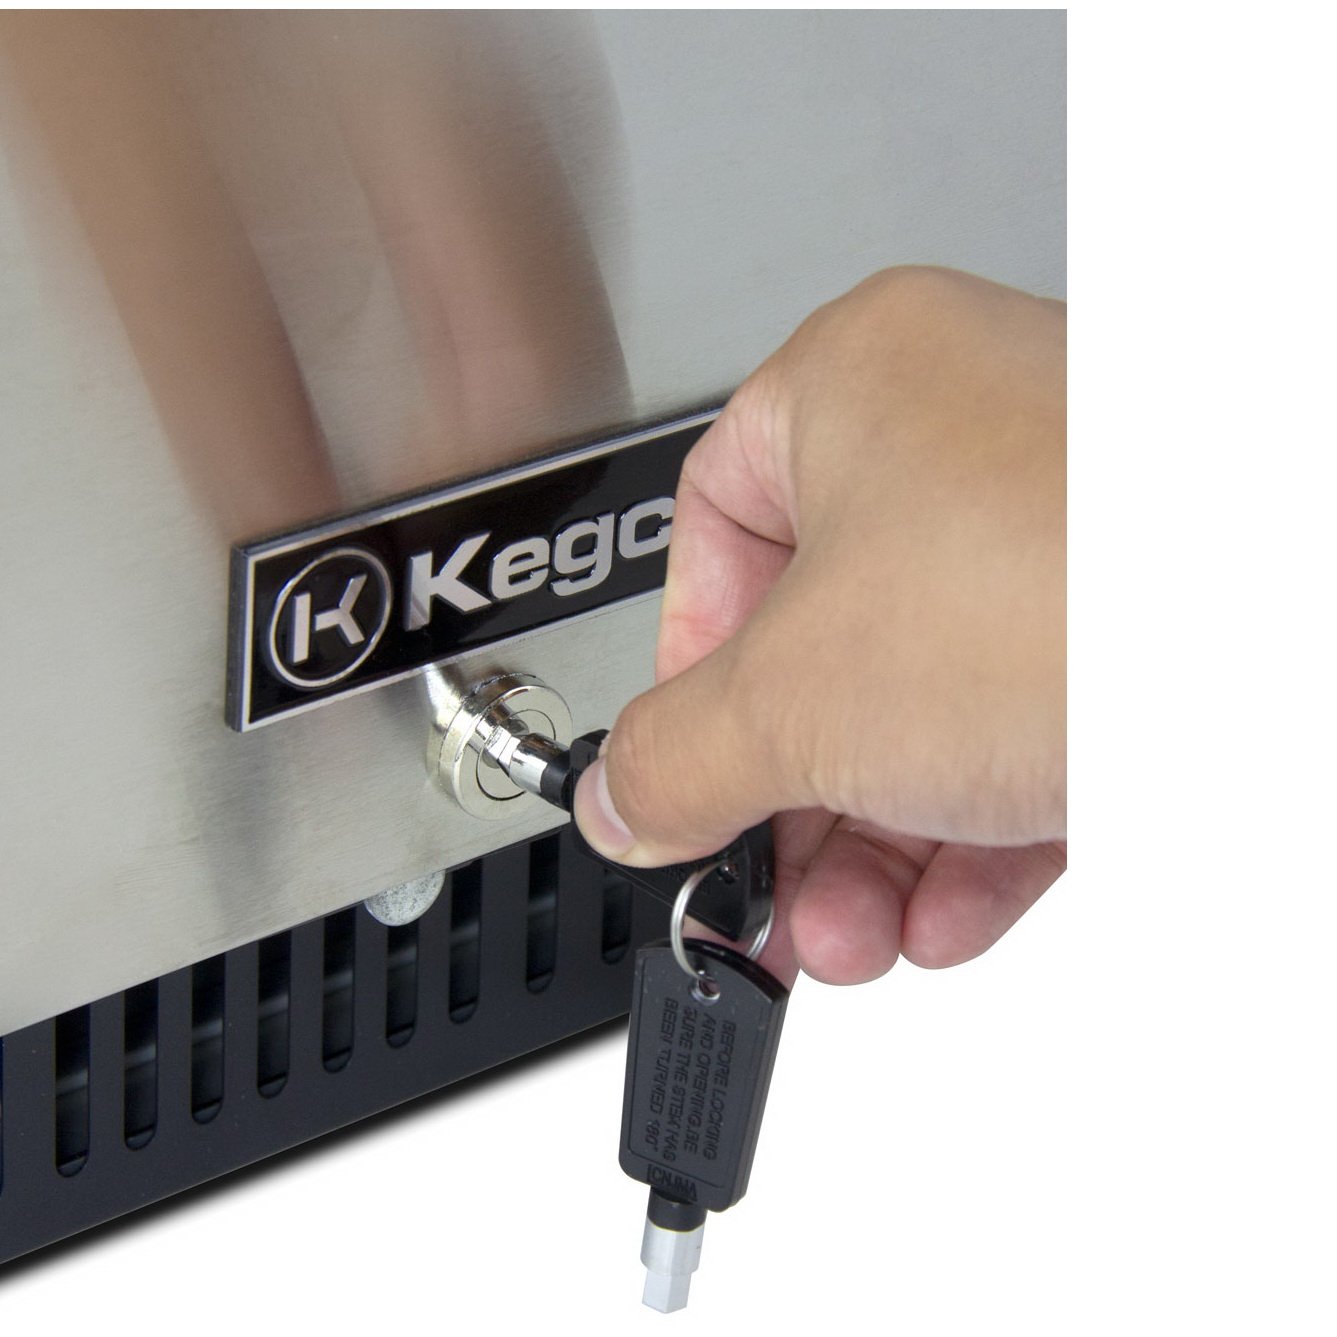 Kegco 15" Wide Commercial Grade Digital Kombucha Dispenser with Stainless Door